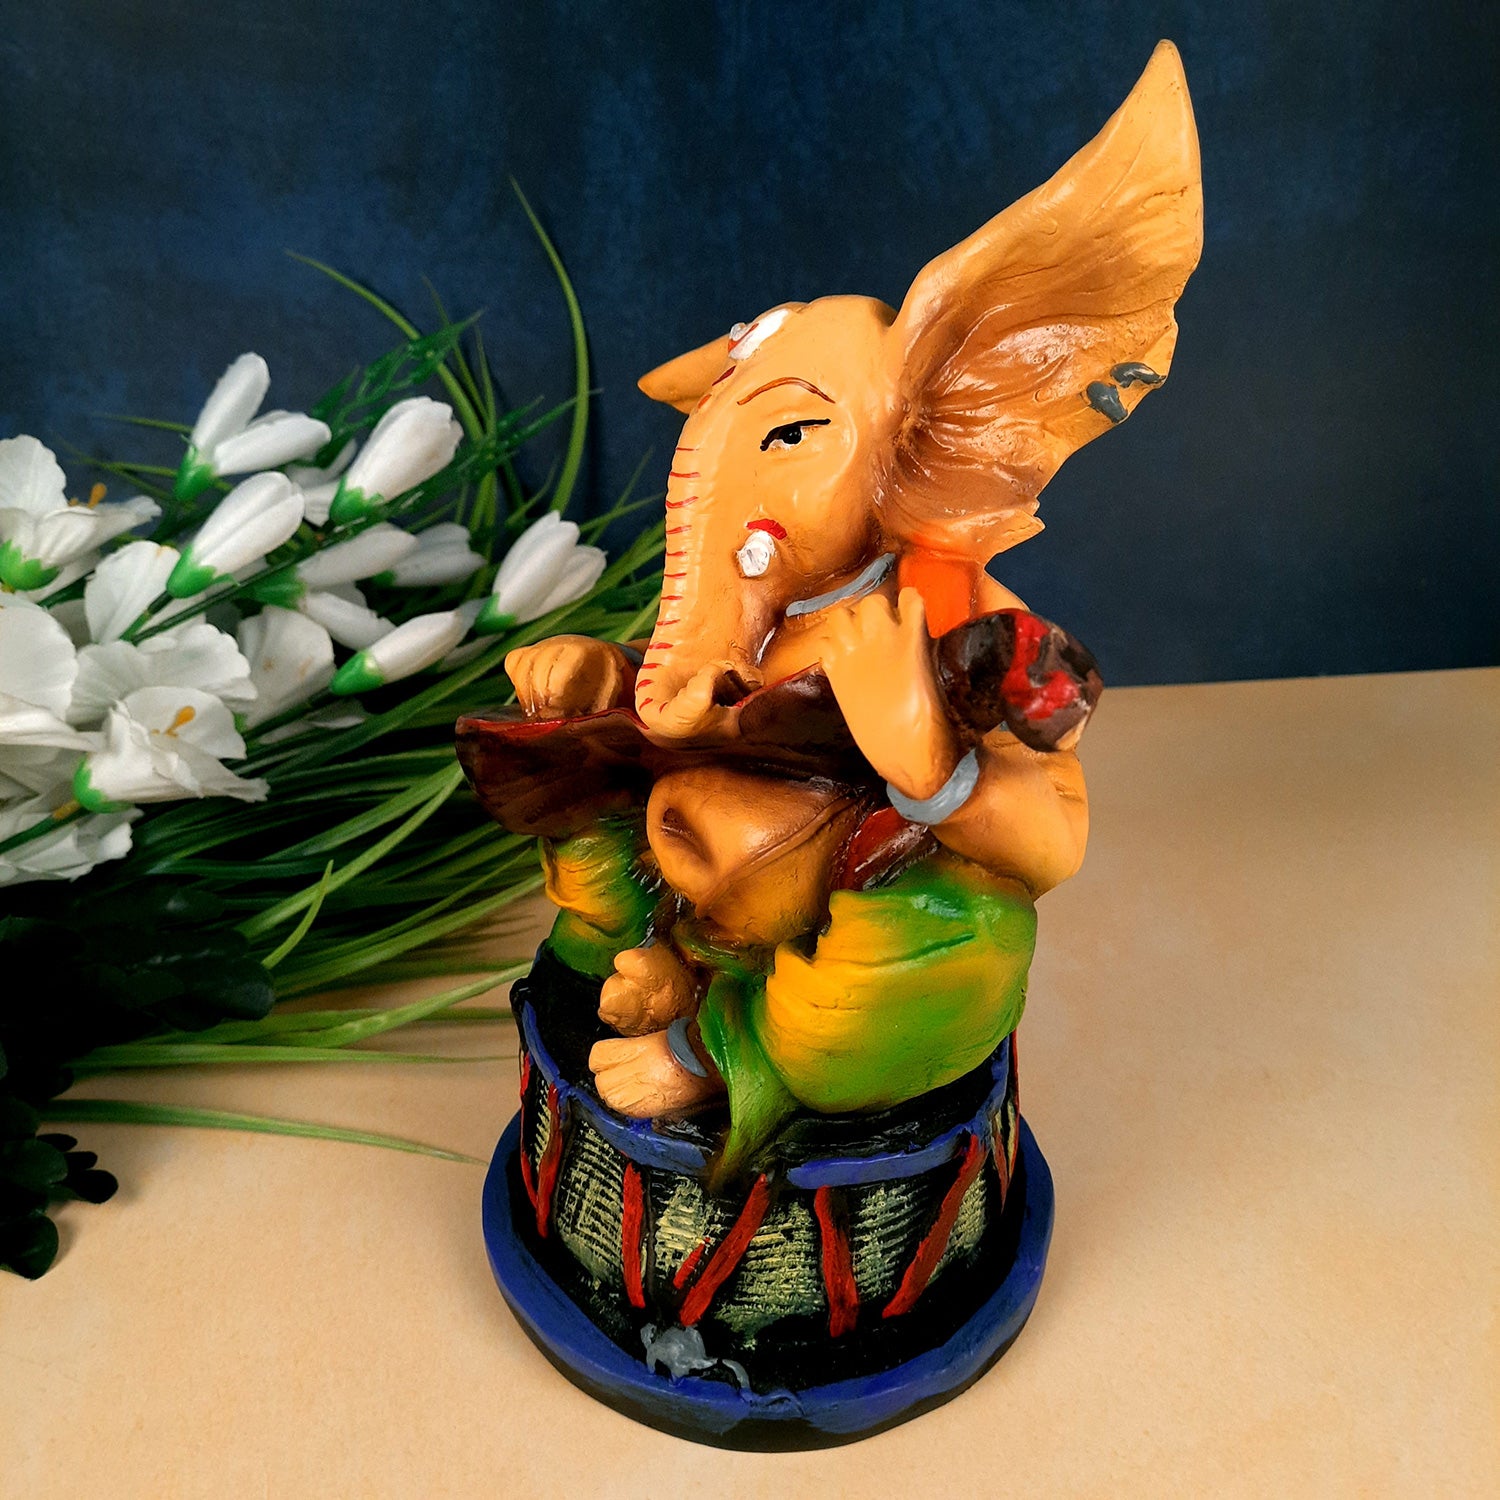 Ganesh Idol | Ganesha Statue - for Puja, Home & Table Decor | Housewarming & Festival Gift - 11 Inch (Set of 2) - Apkamart